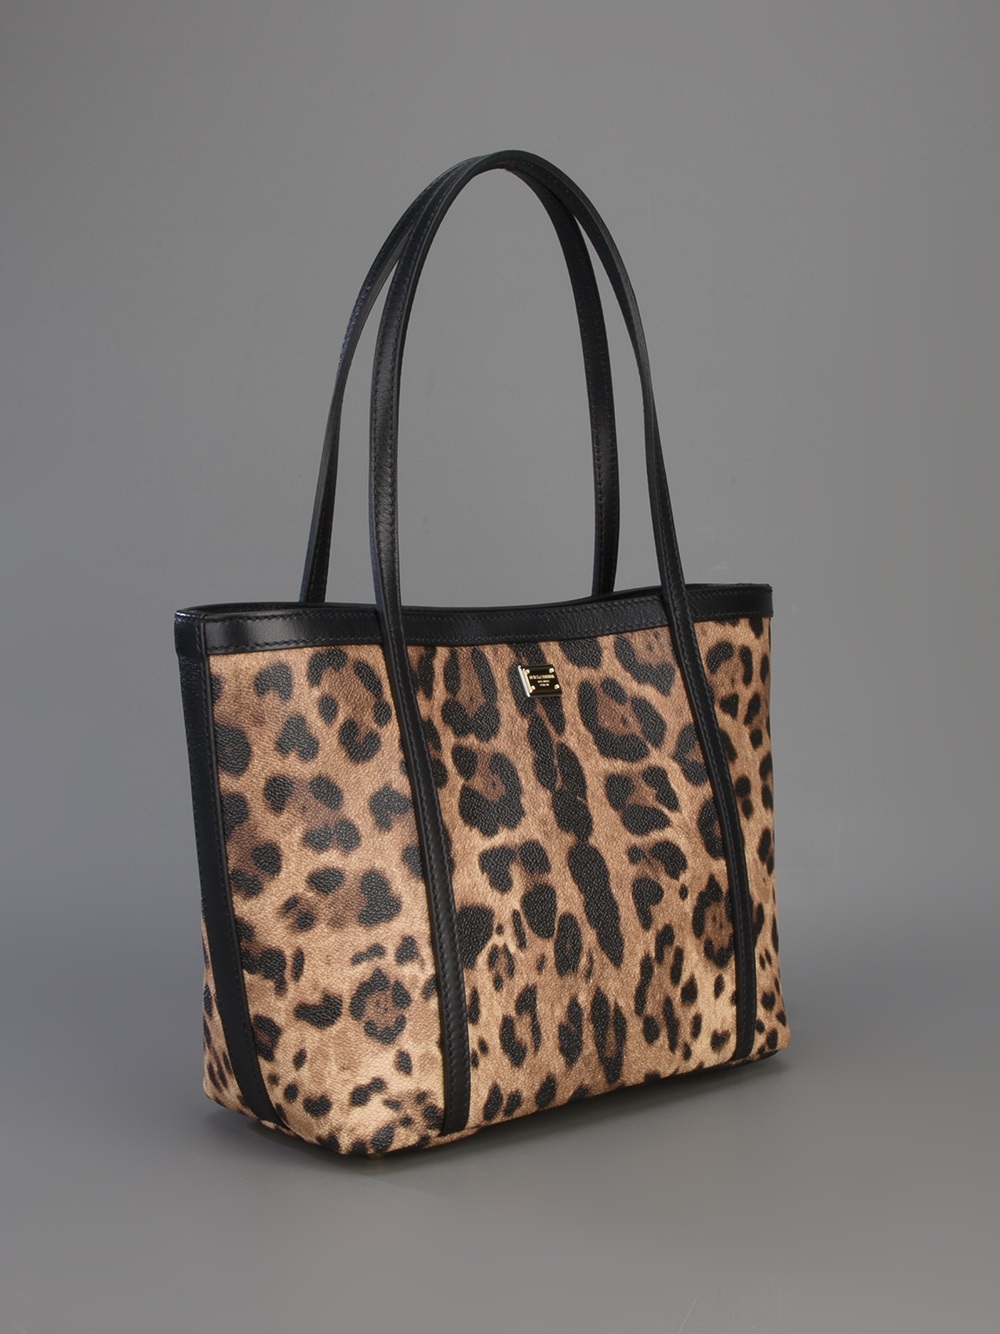 Dolce & Gabbana Leopard Print Tote - Lyst